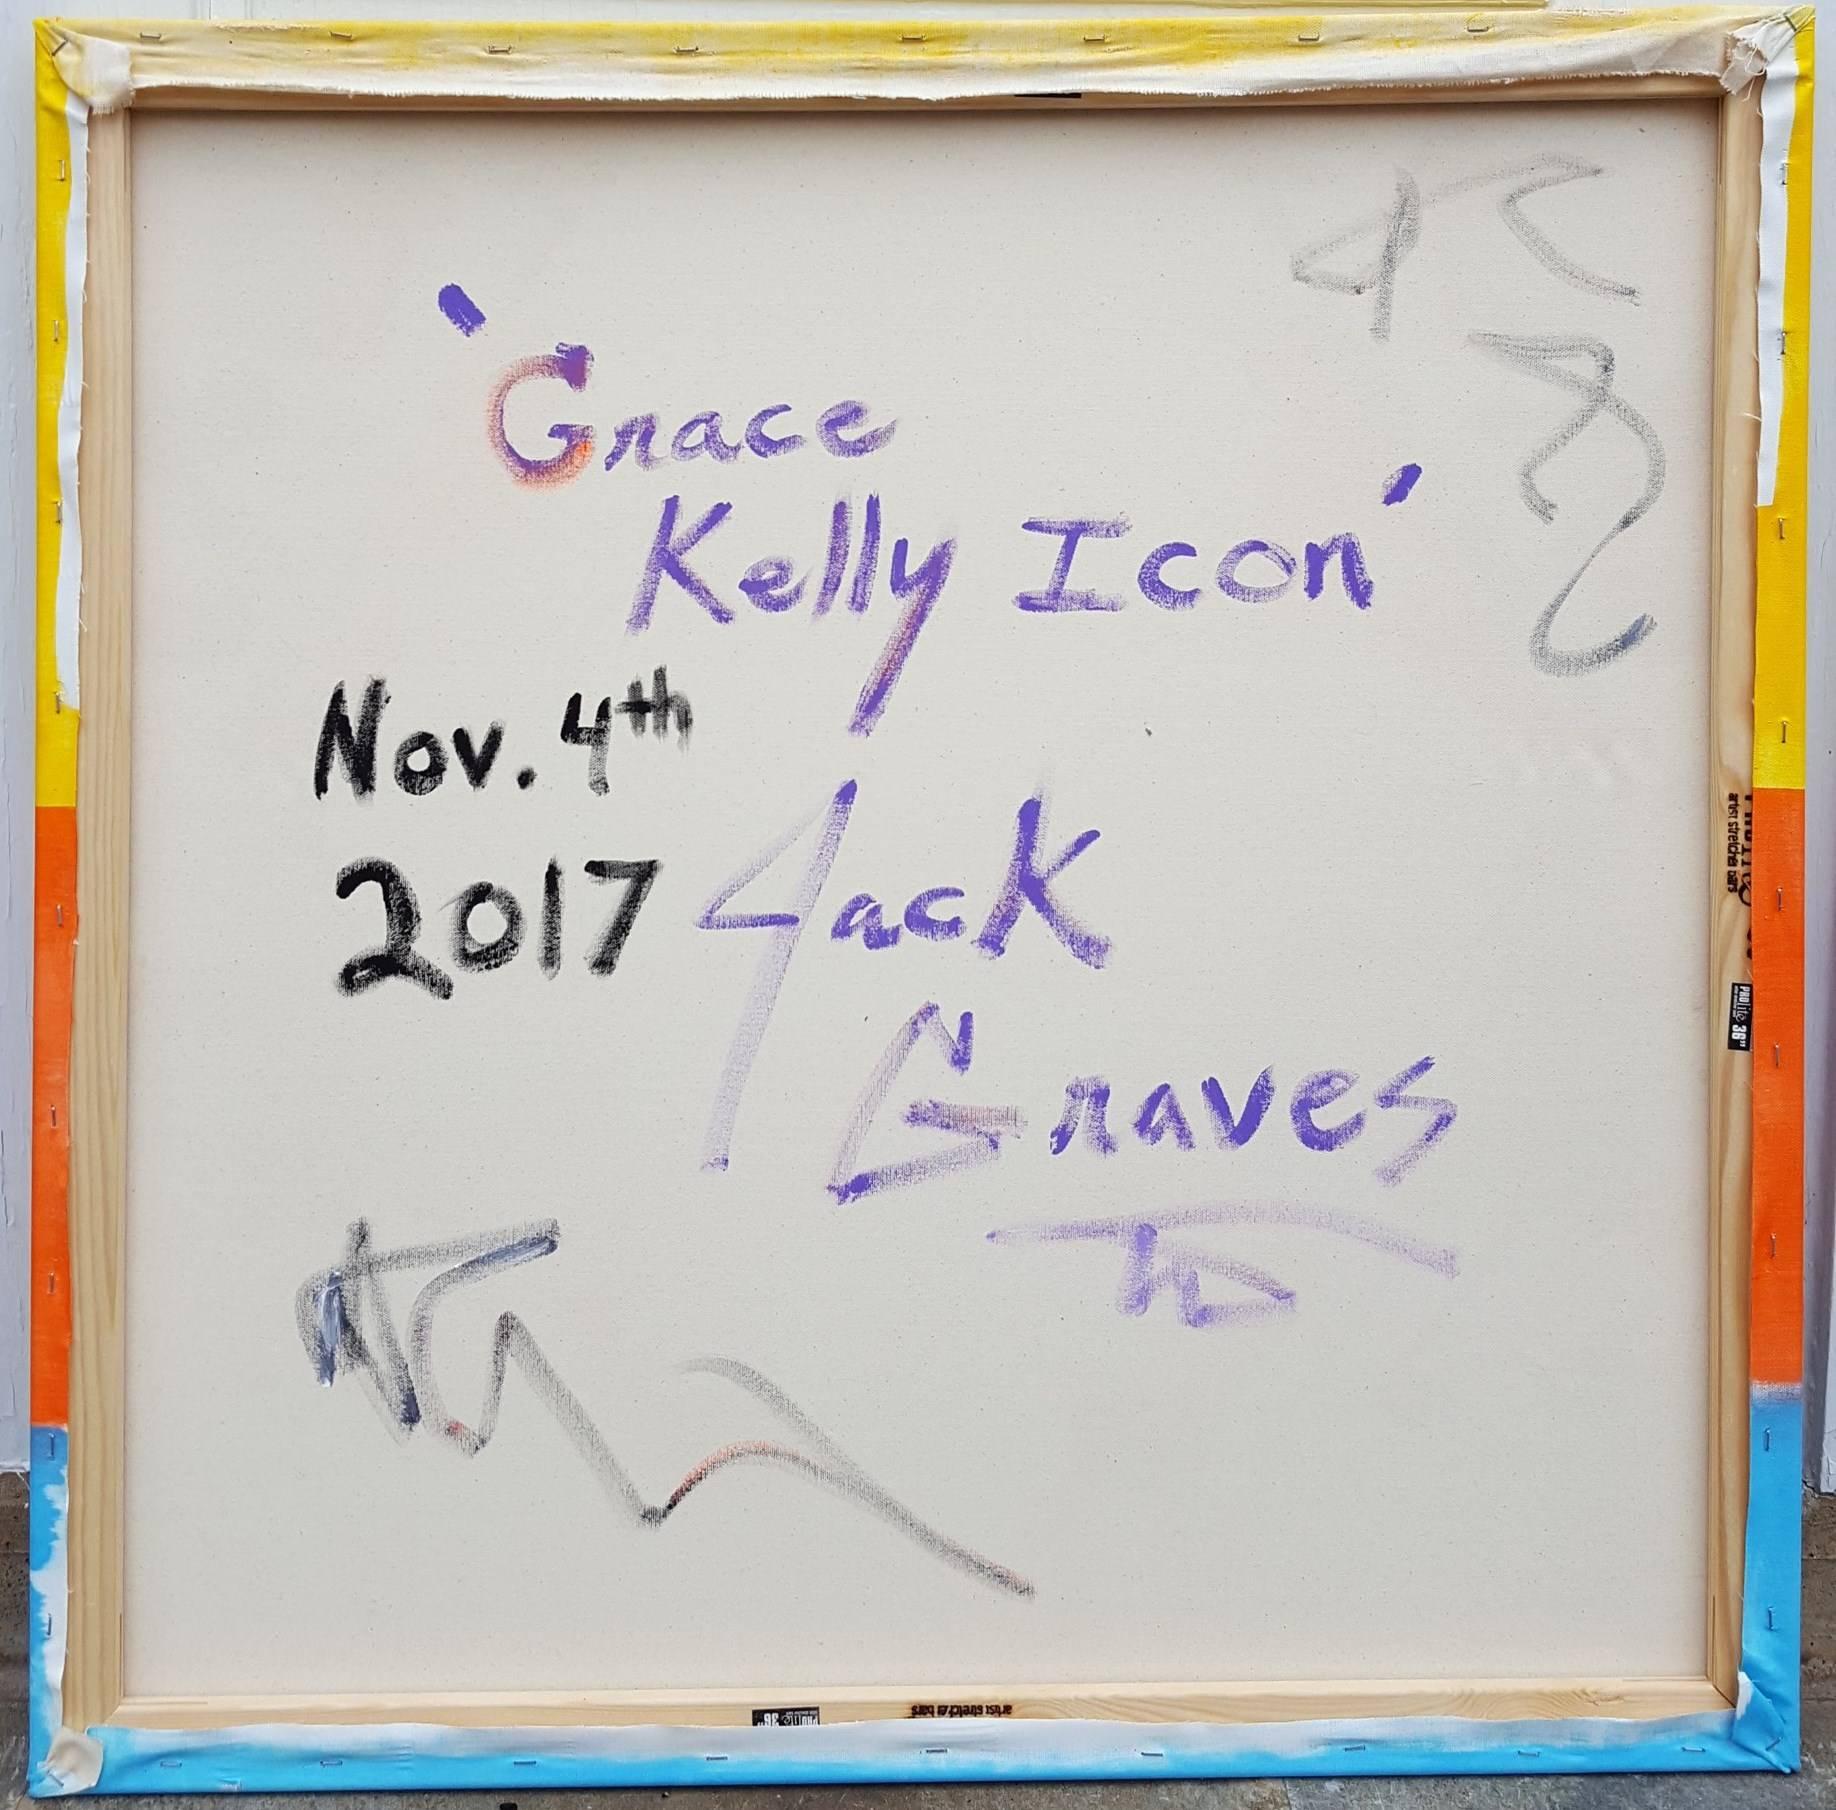 Grace Kelly Icon 5